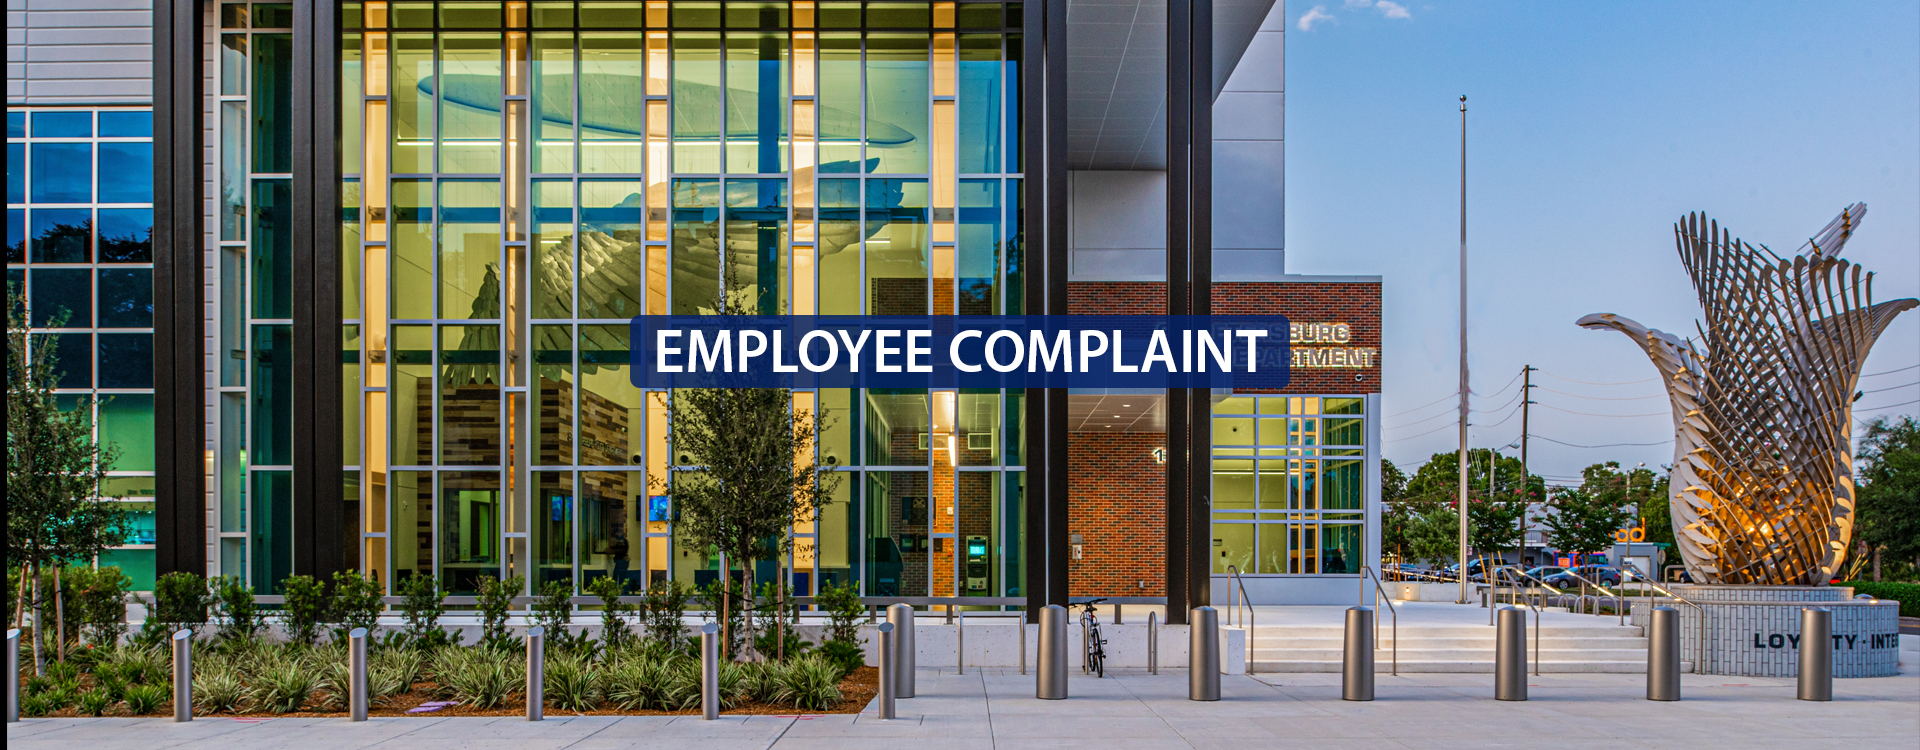 Employee Complaint